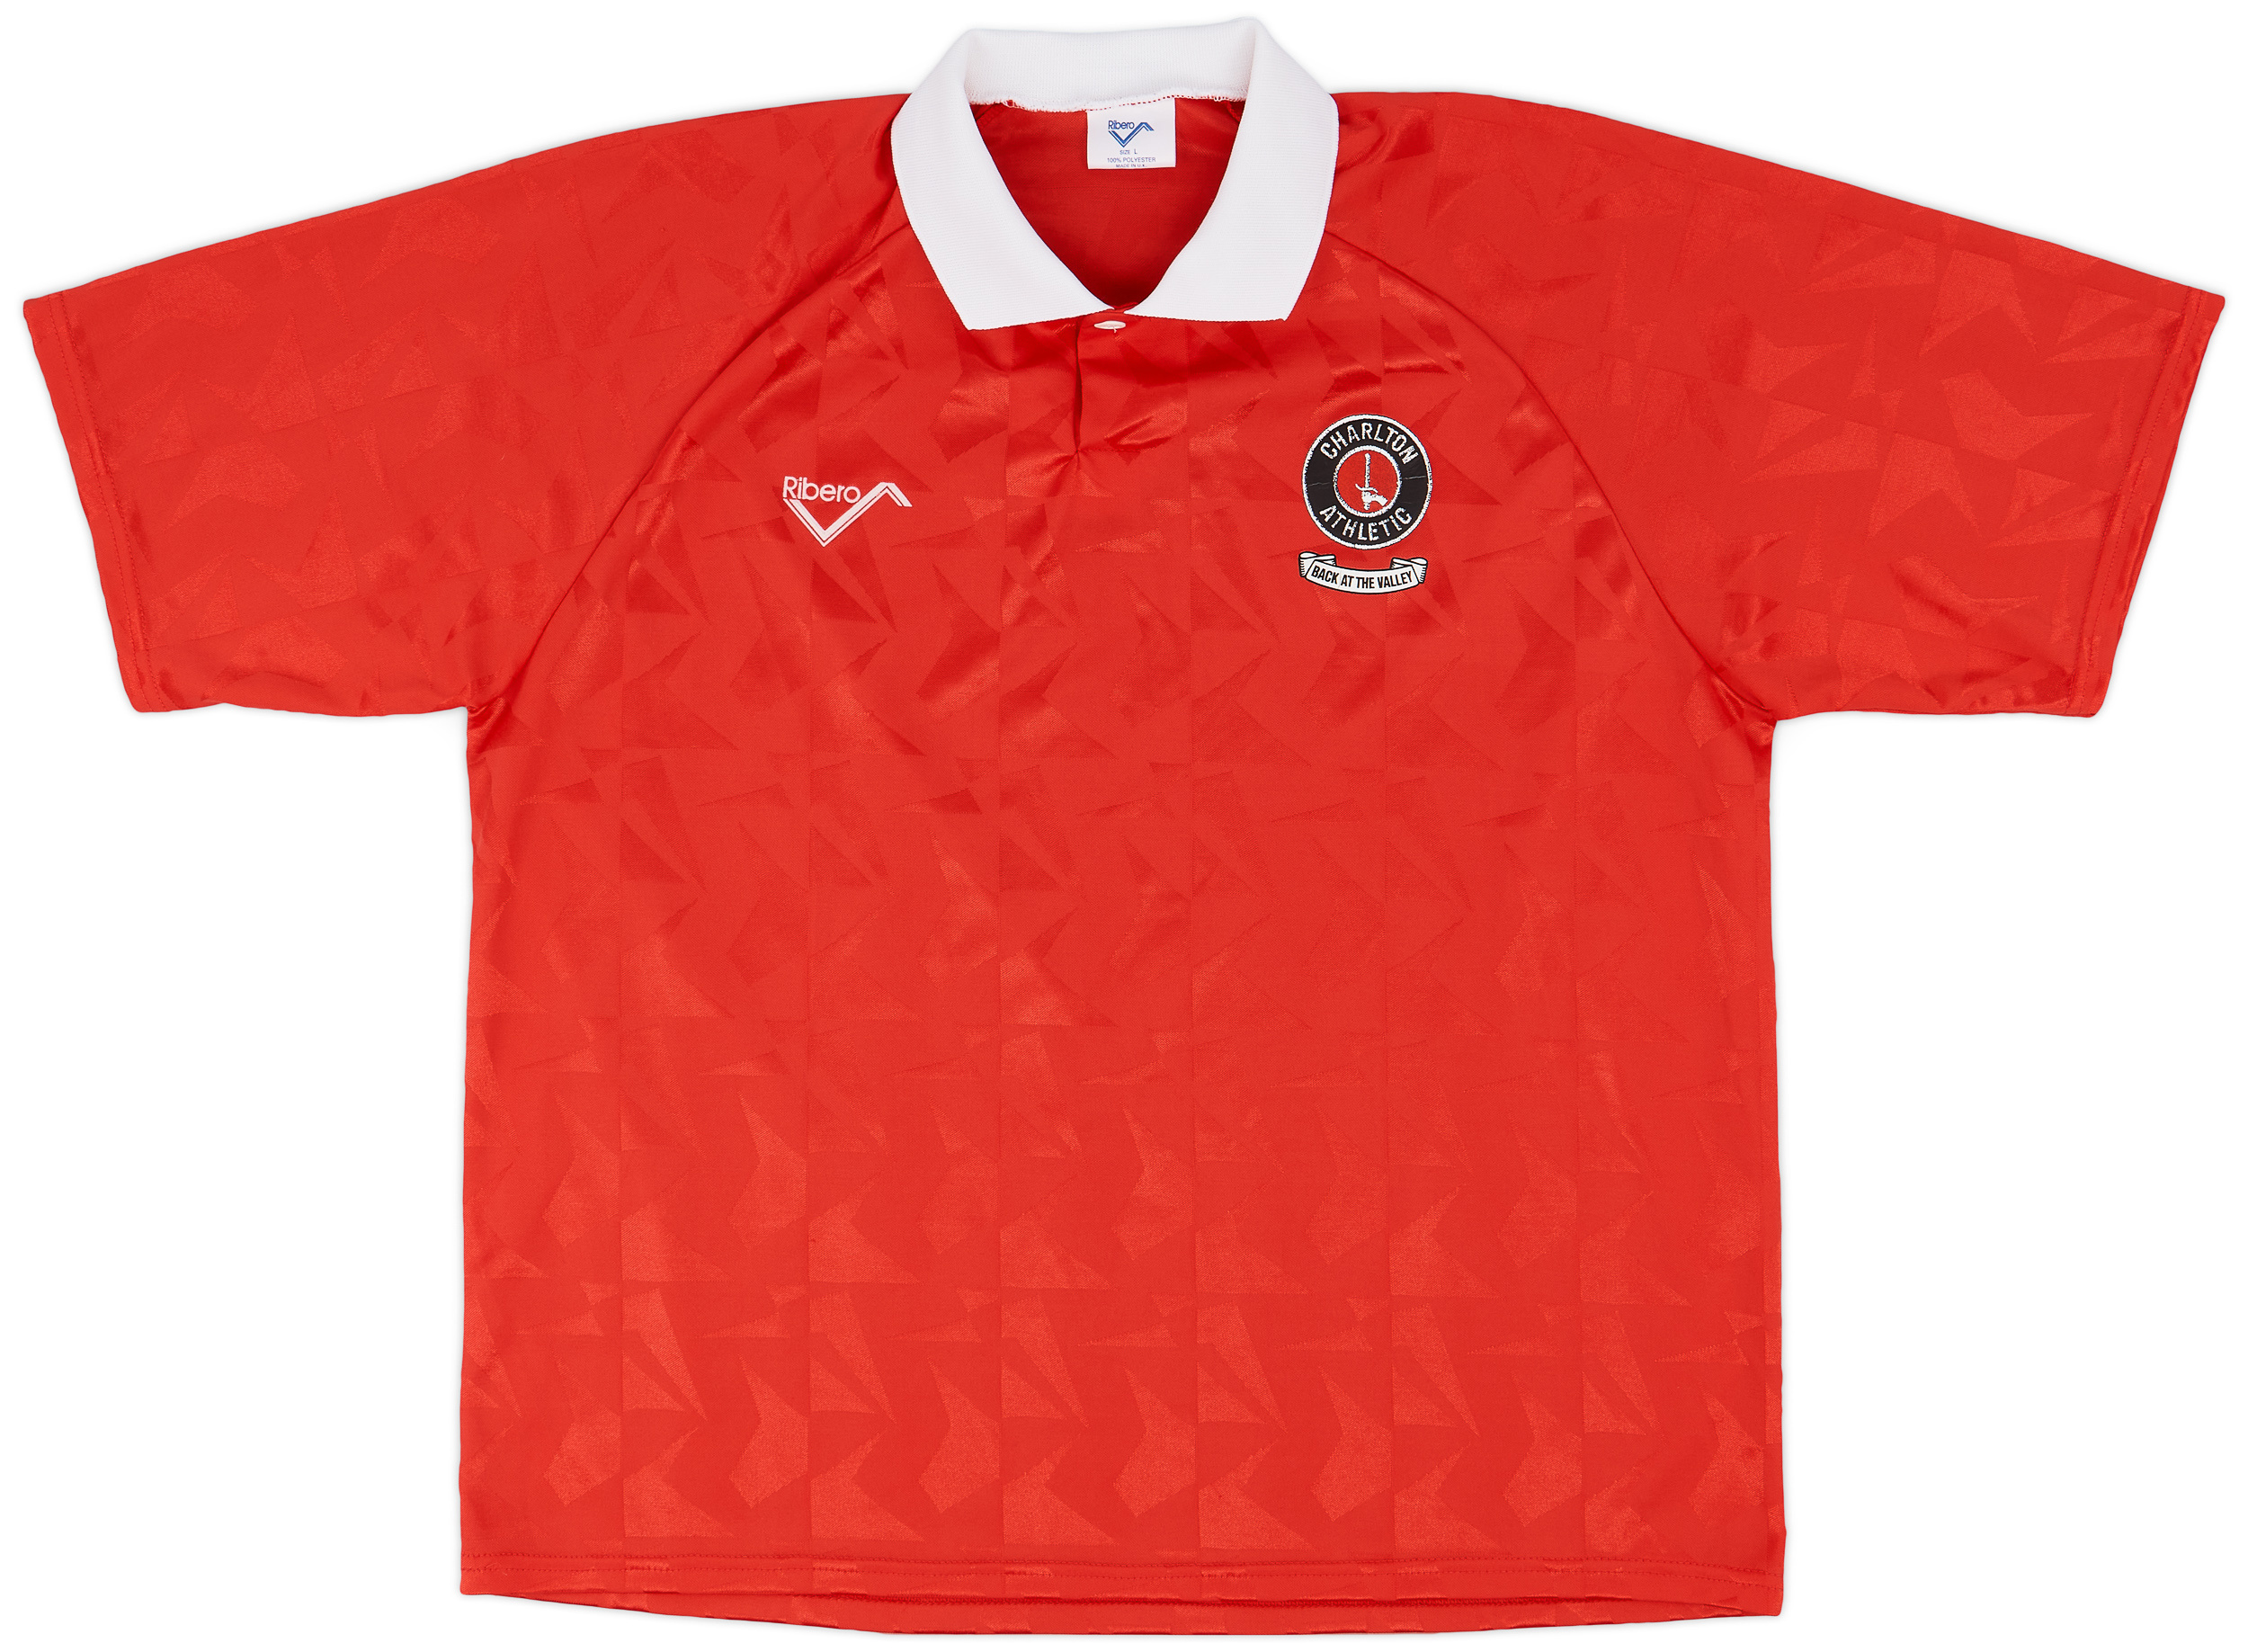 1992-93 Charlton 'Back at The Valley' Home Shirt - 8/10 - ()